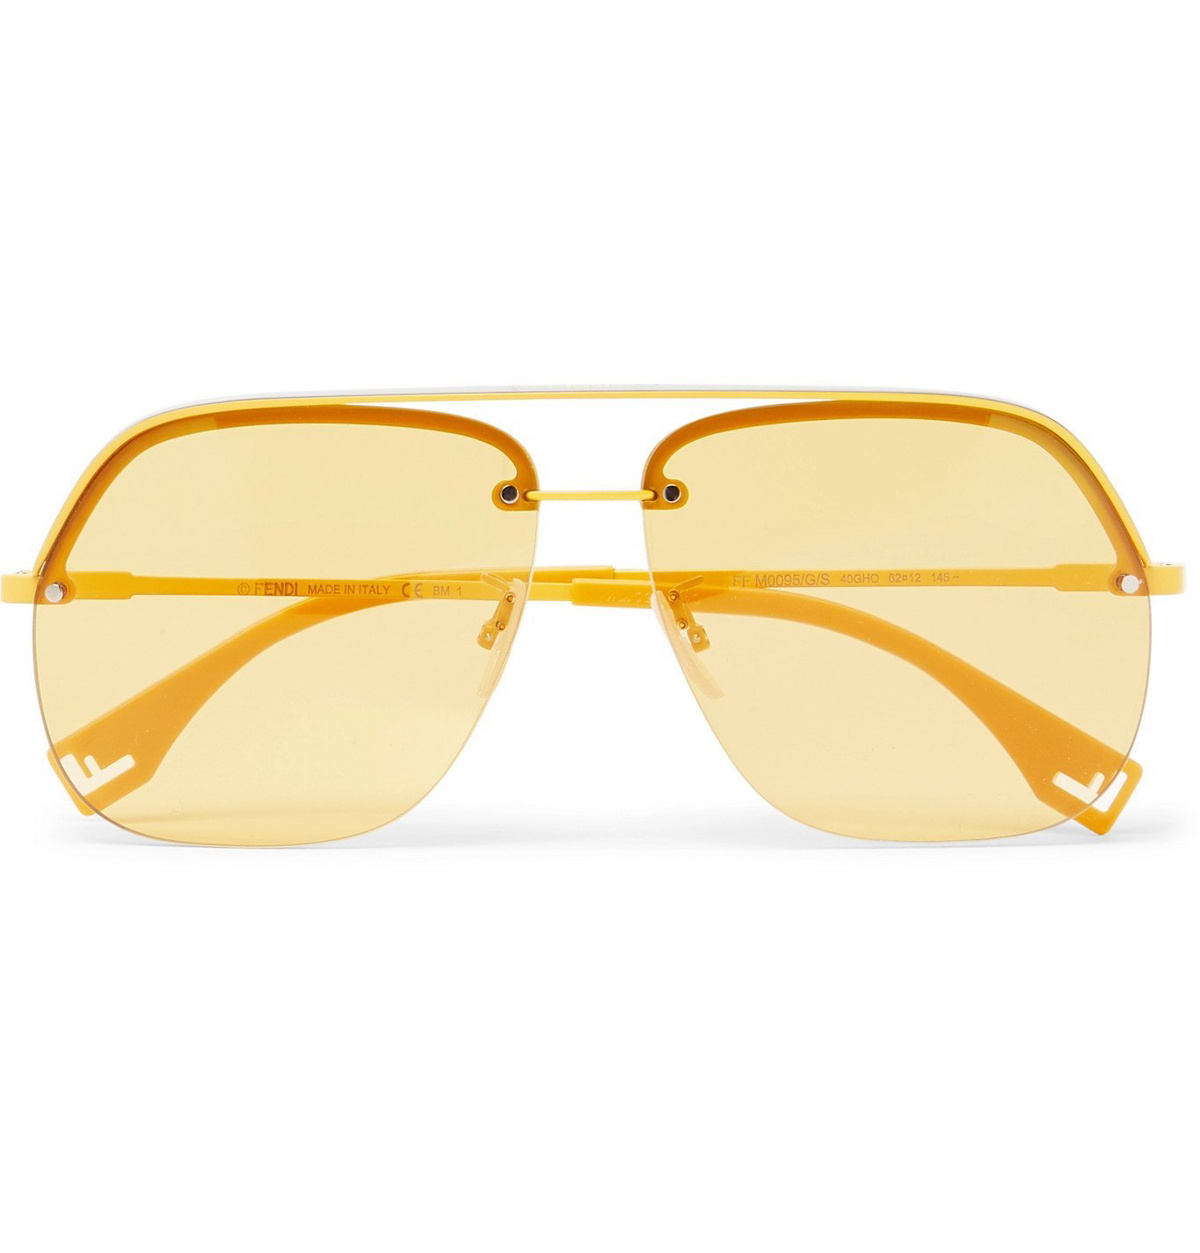 Fendi - Aviator-Style Gold-Tone and Acetate Sunglasses - Fendi